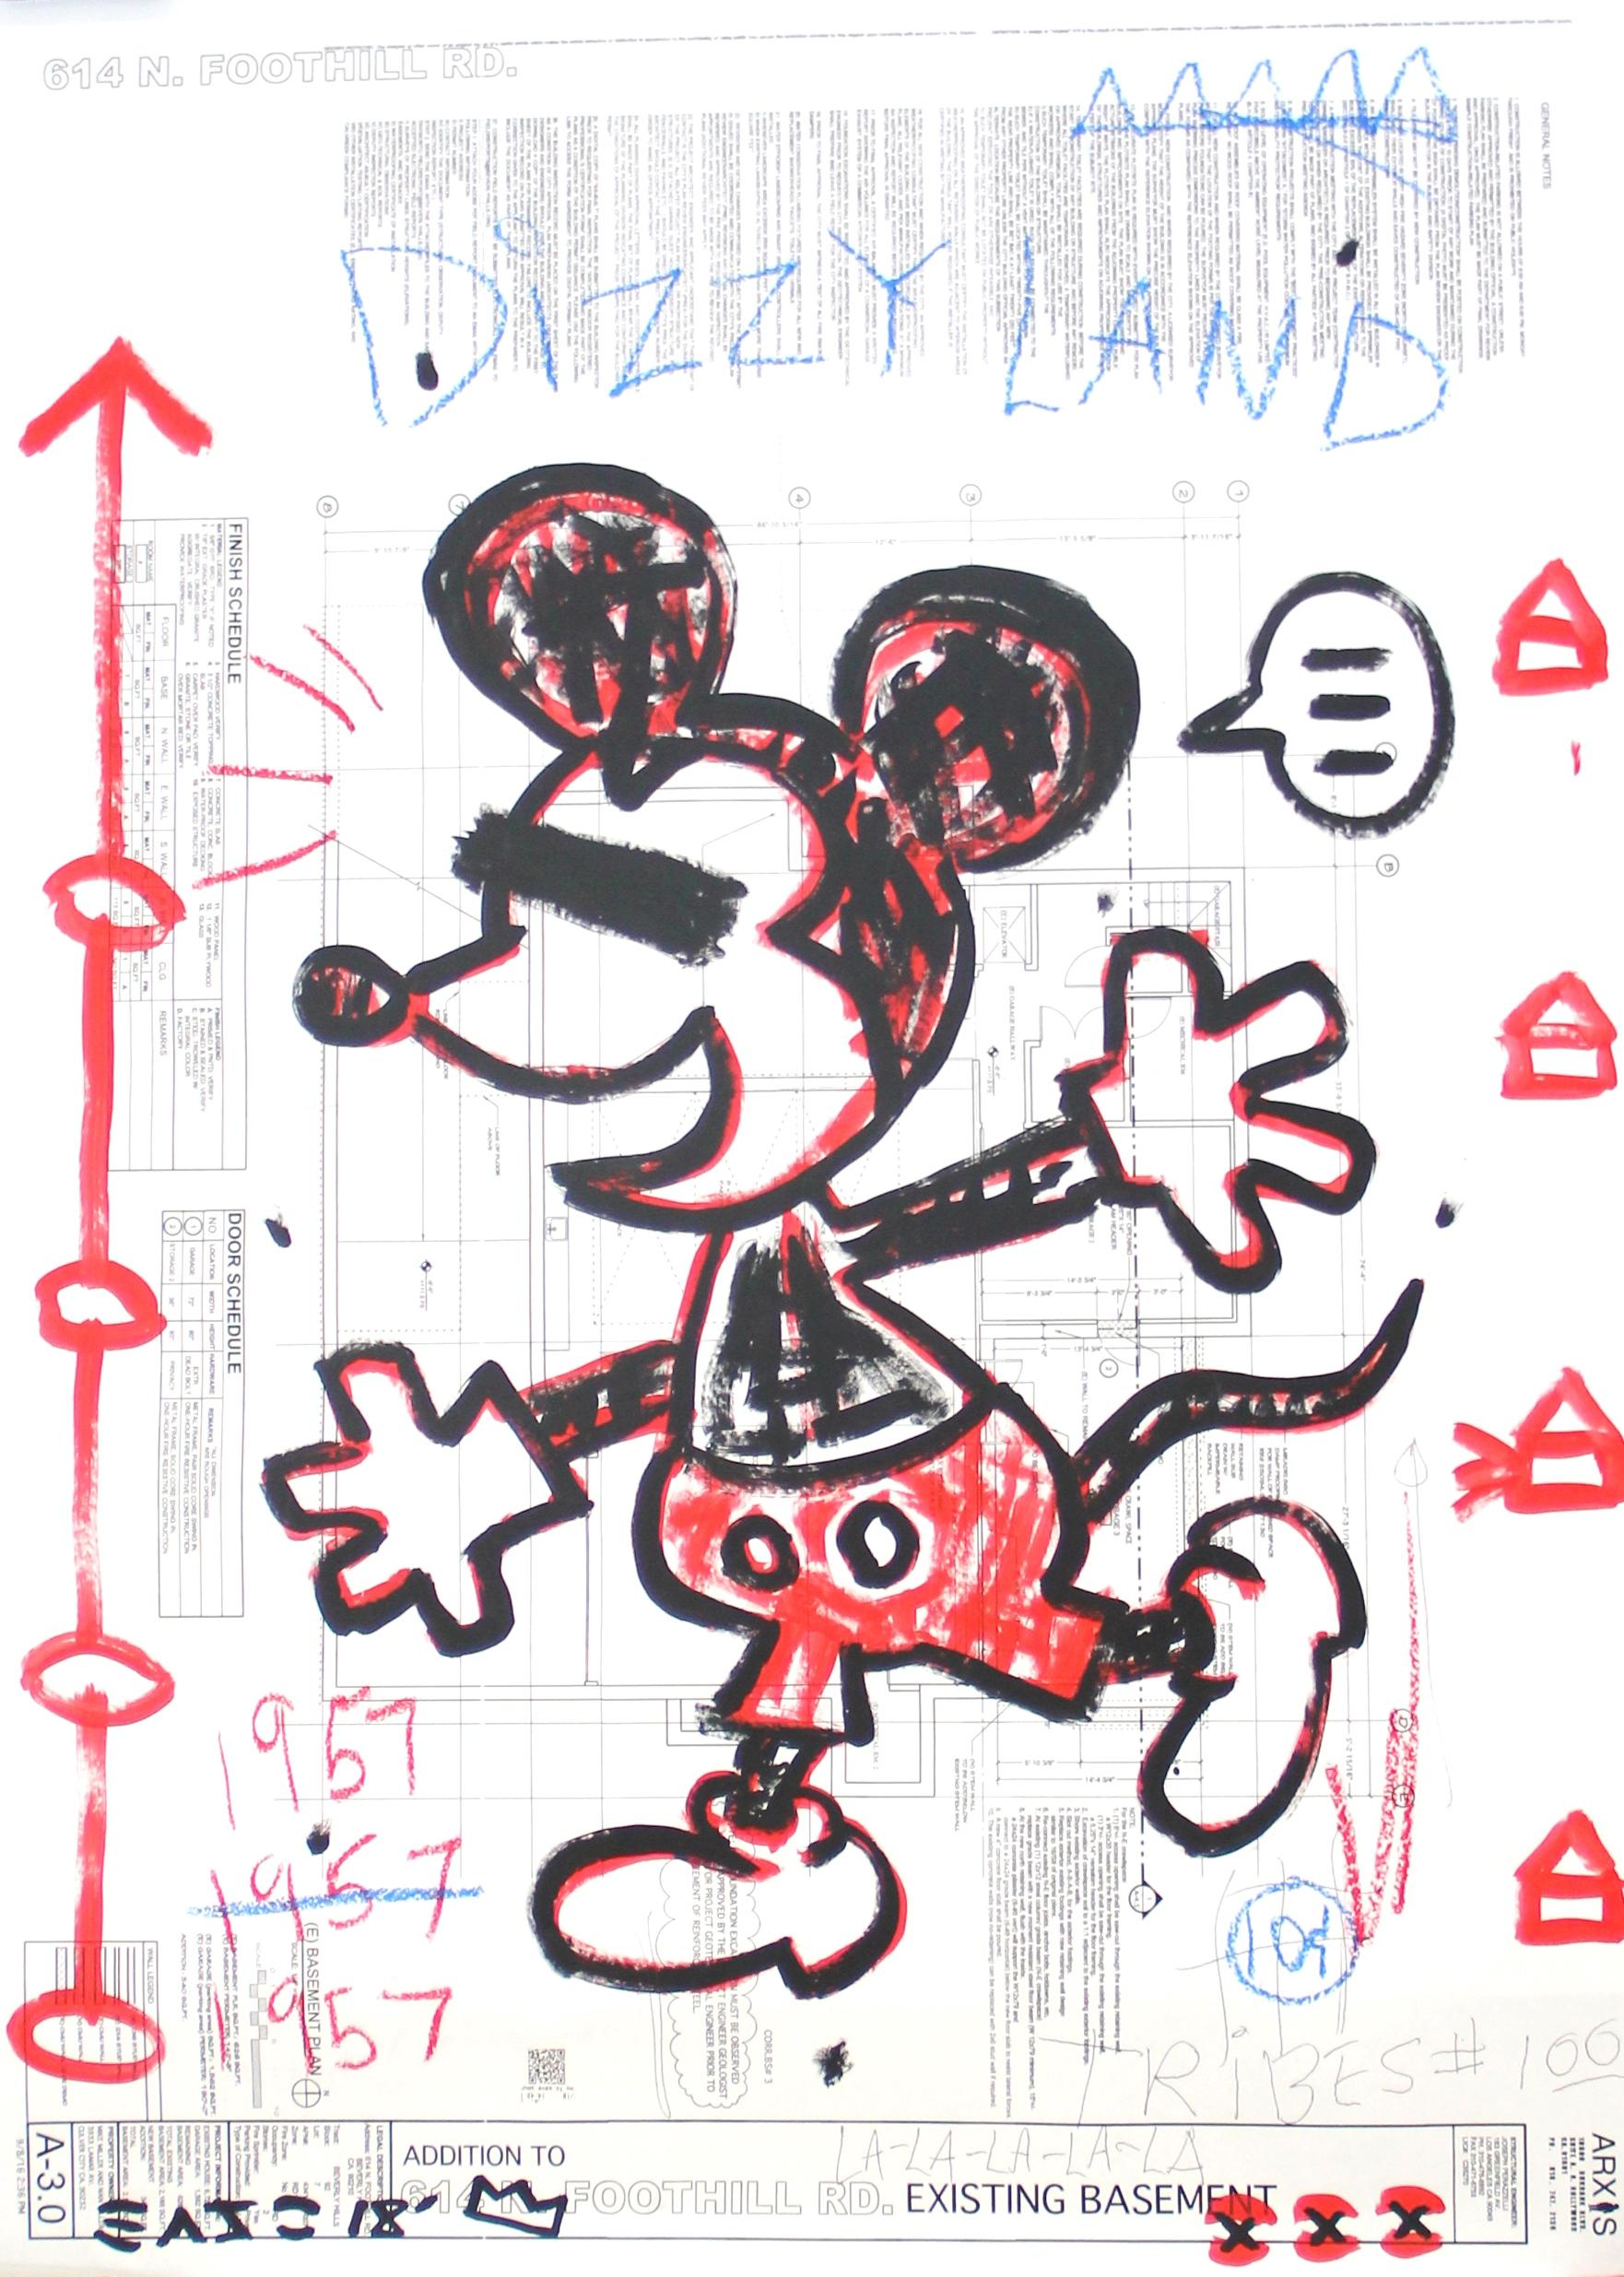 Gary John Animal Painting - Dizzy Mickey